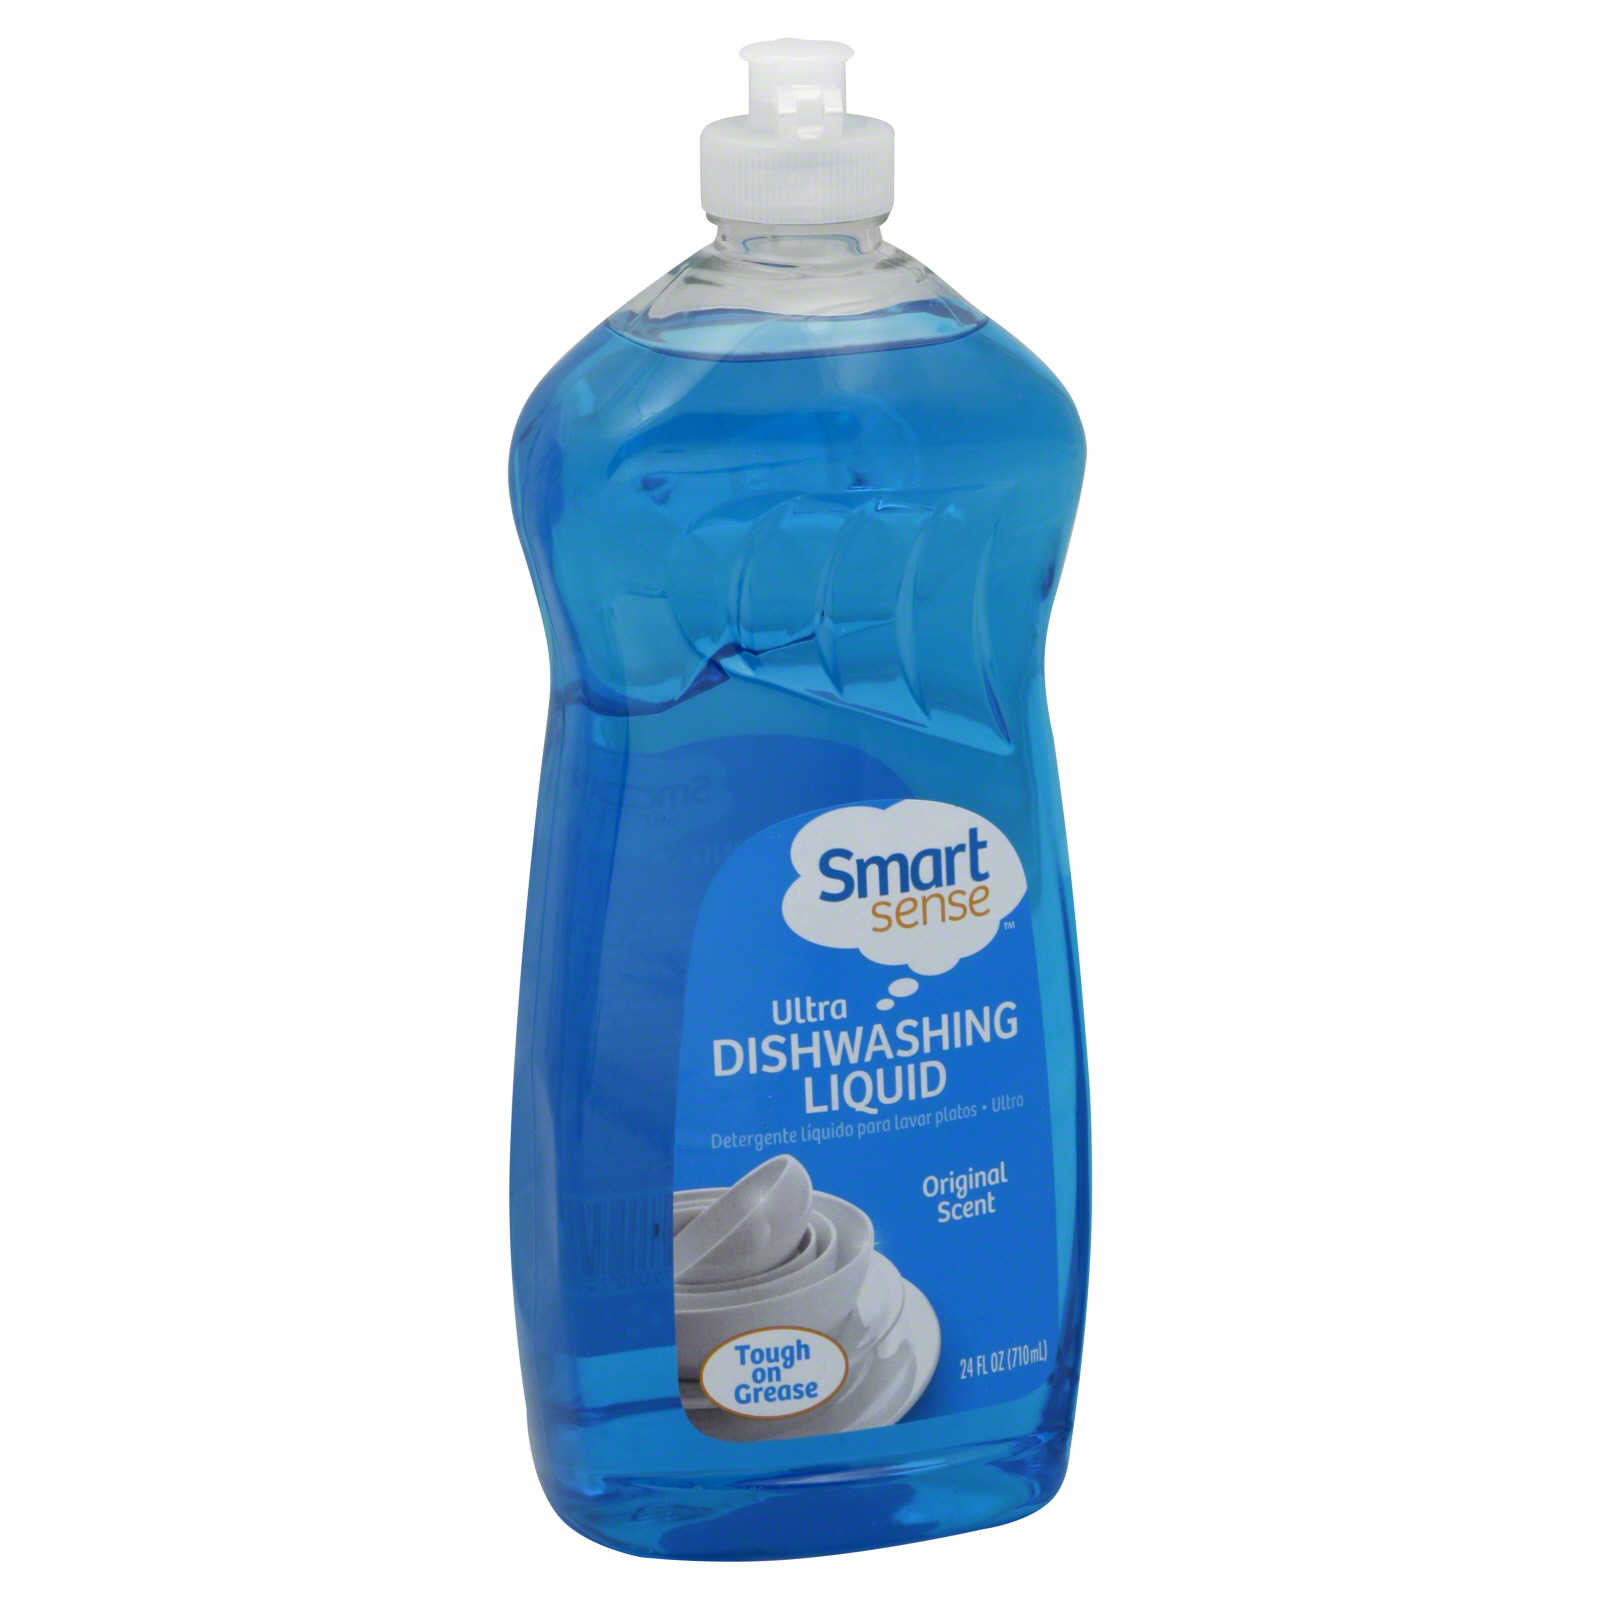 Smart Sense Ultra Dishwashing Liquid, Original Scent, 24 fl oz